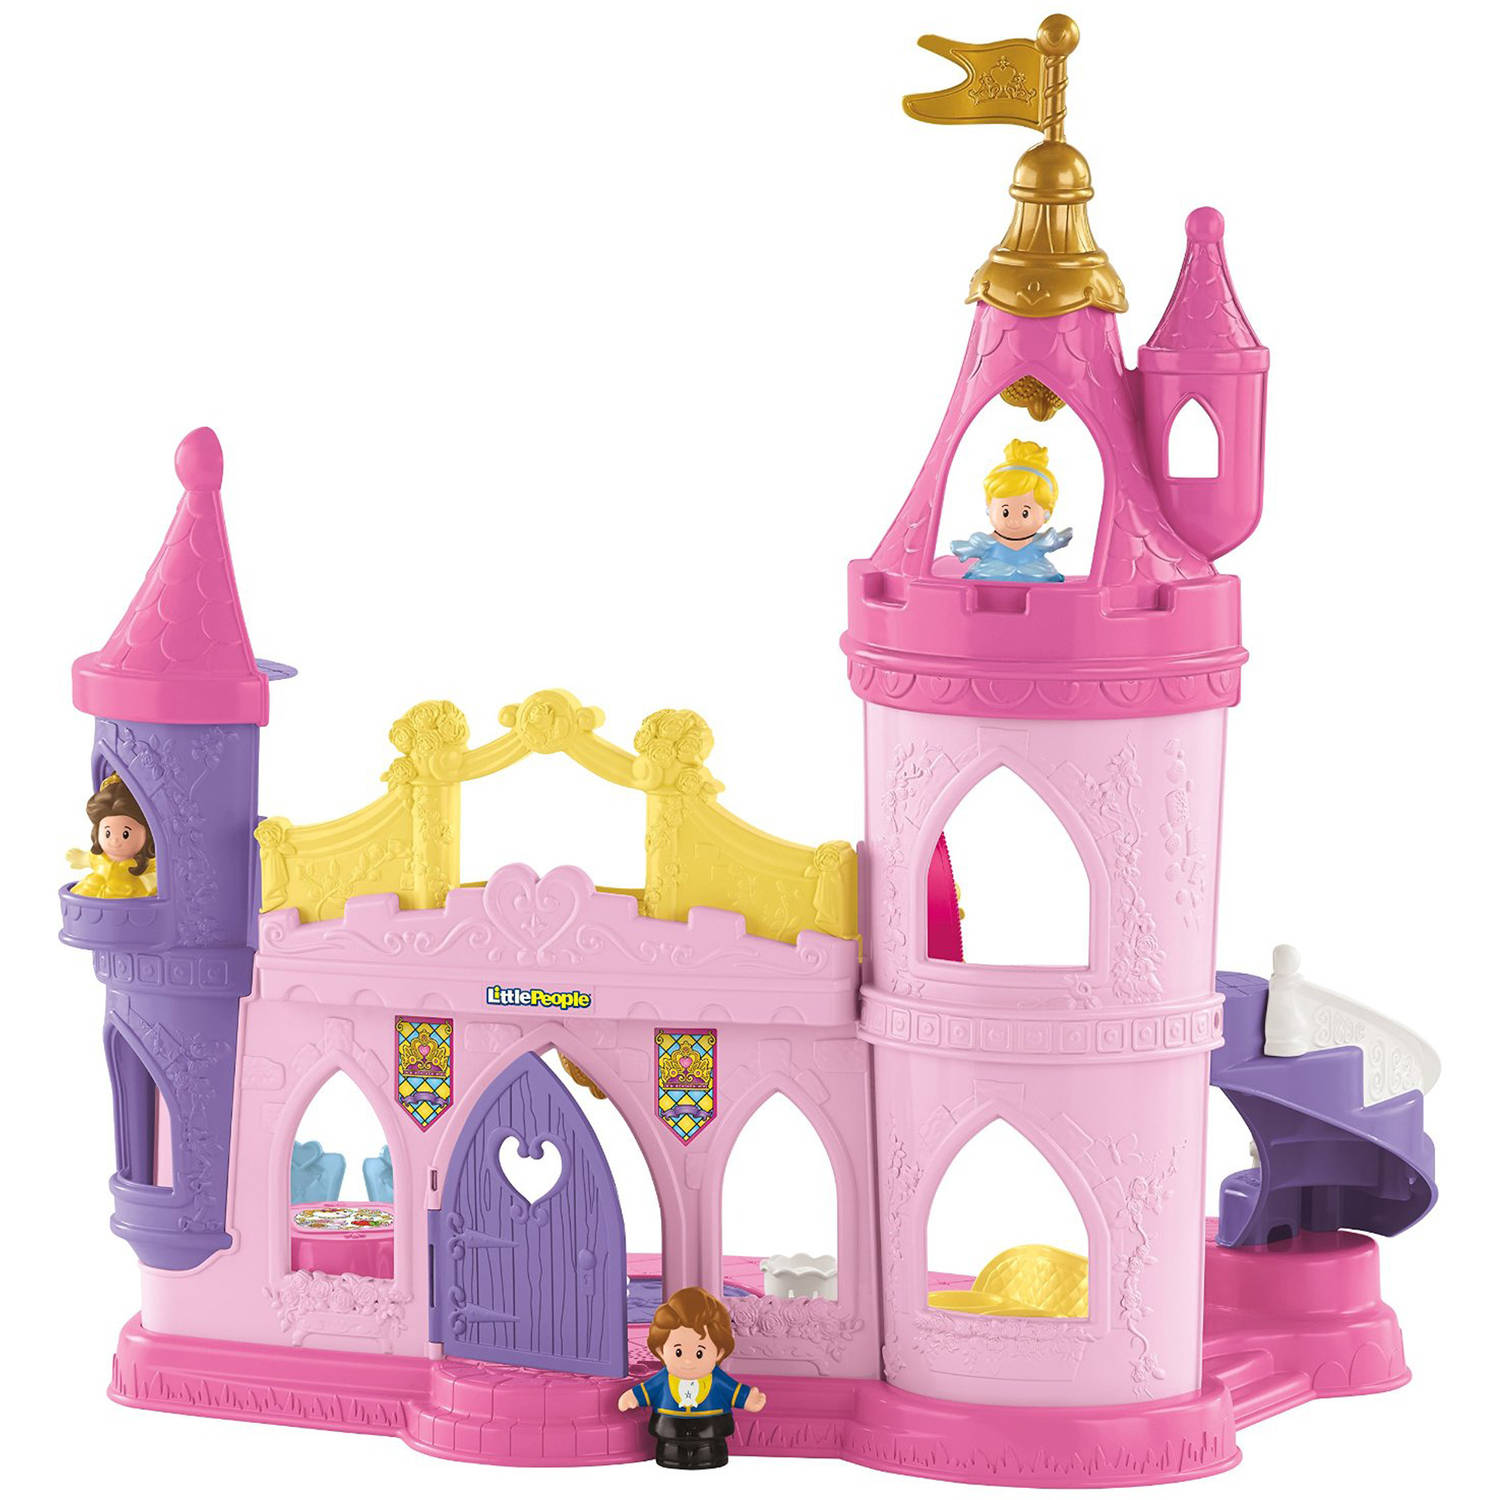 Little People Disney Princess Musical Dancing Palace – Just $22.97!